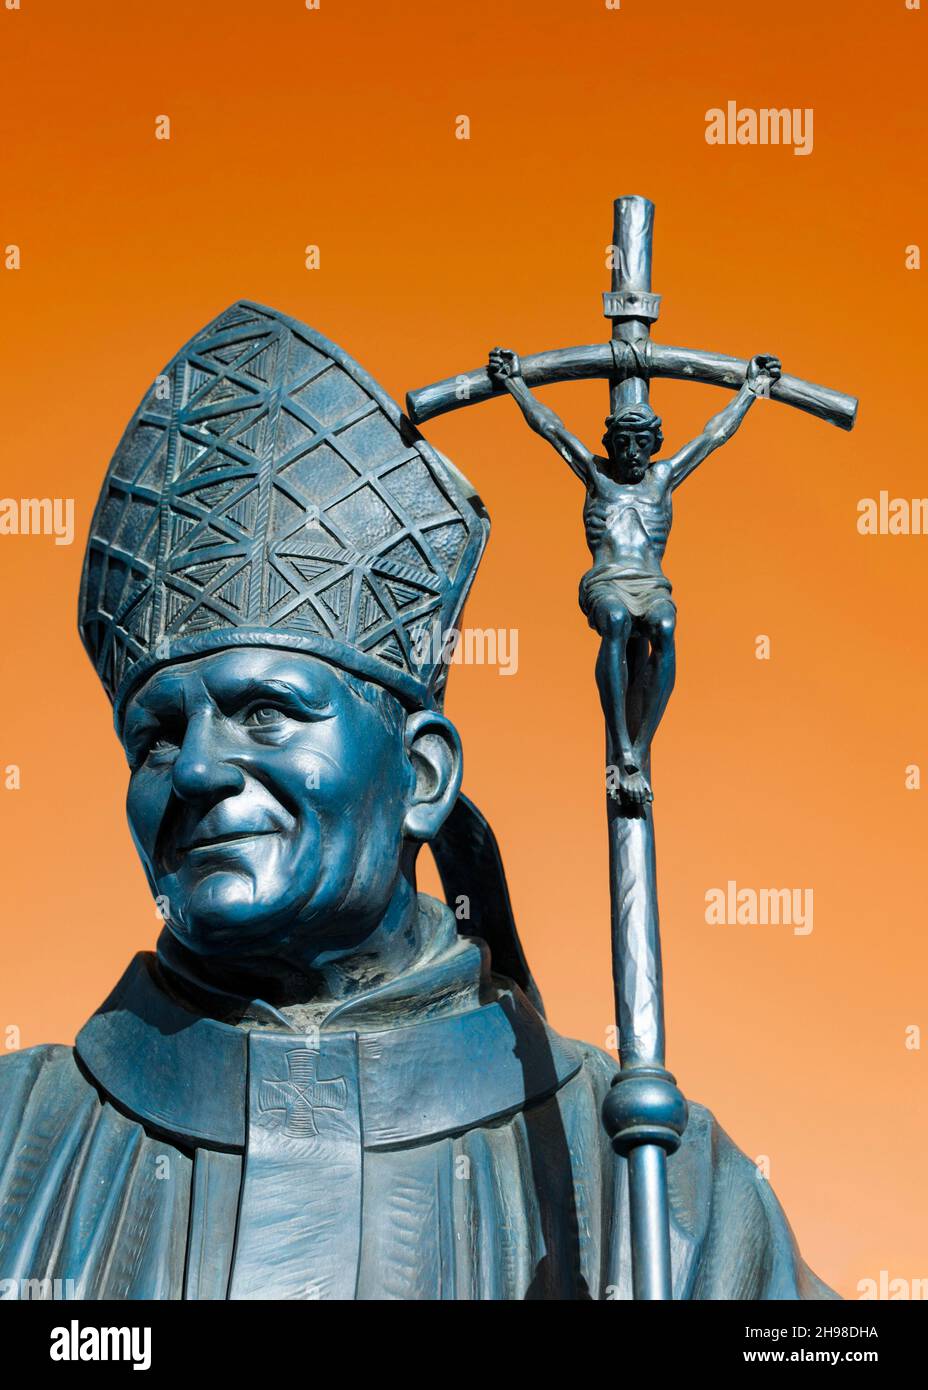 Sculpture or monument to Pope John Paul II in Santa Clara city, Villa Clara, Cuba. Nov. 12, 2021 Stock Photo